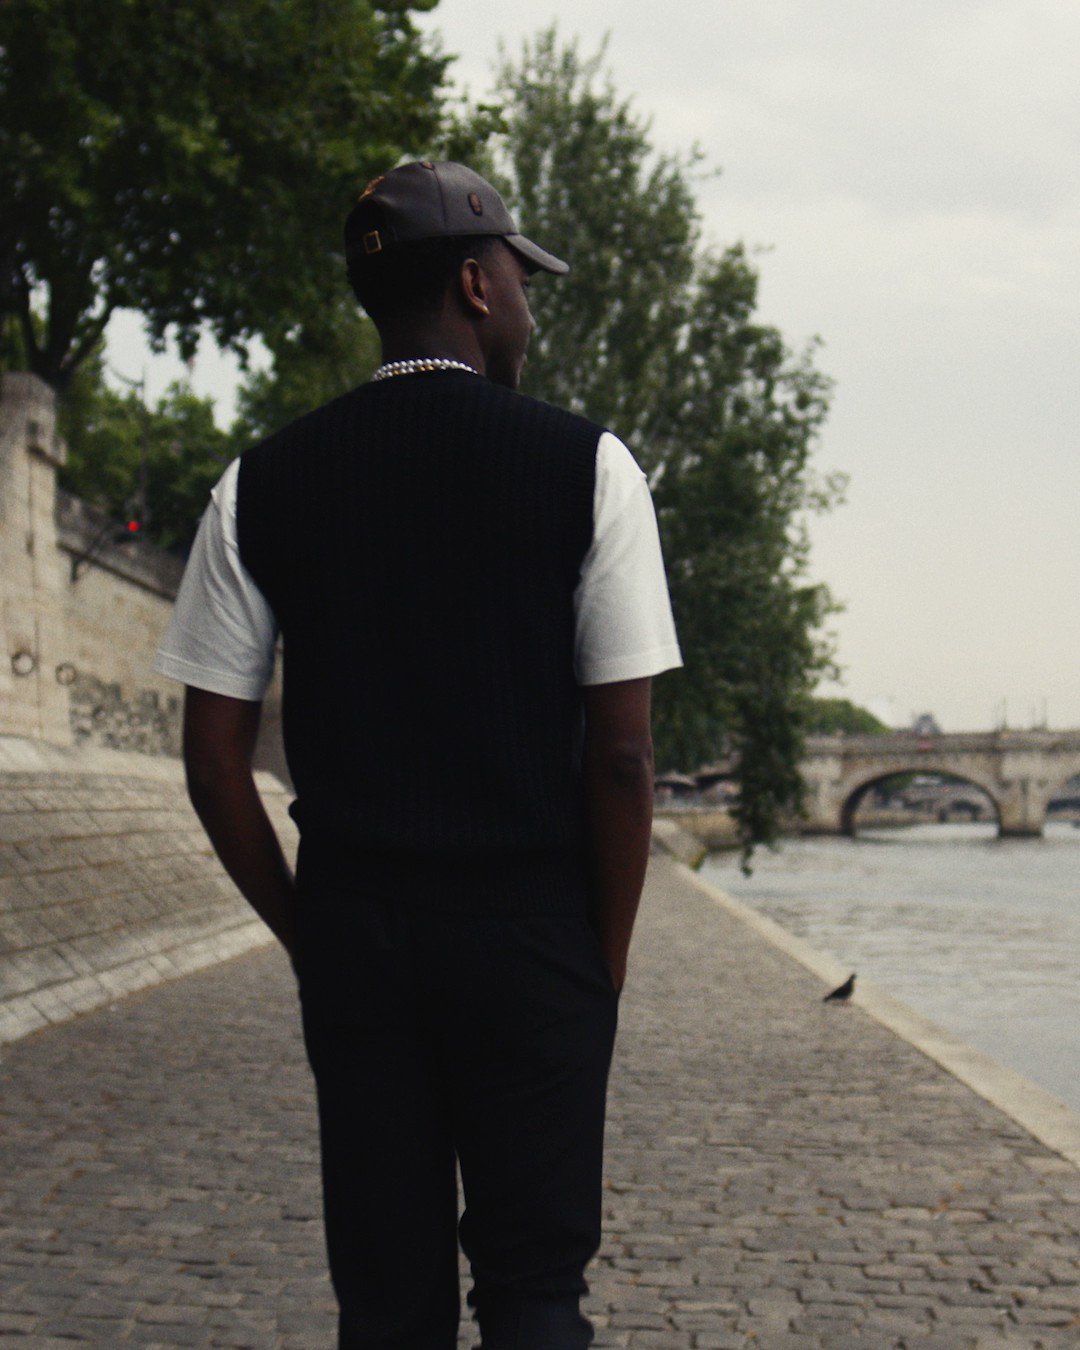 Louis Vuitton on X: Men's Spring-Summer 2024 Show. @MarcusRashford  attended @Pharrell's debut presentation on the iconic Pont Neuf Bridge in  Paris. Watch the full show at  #LVMenSS24 # LouisVuitton #PharrellWilliams